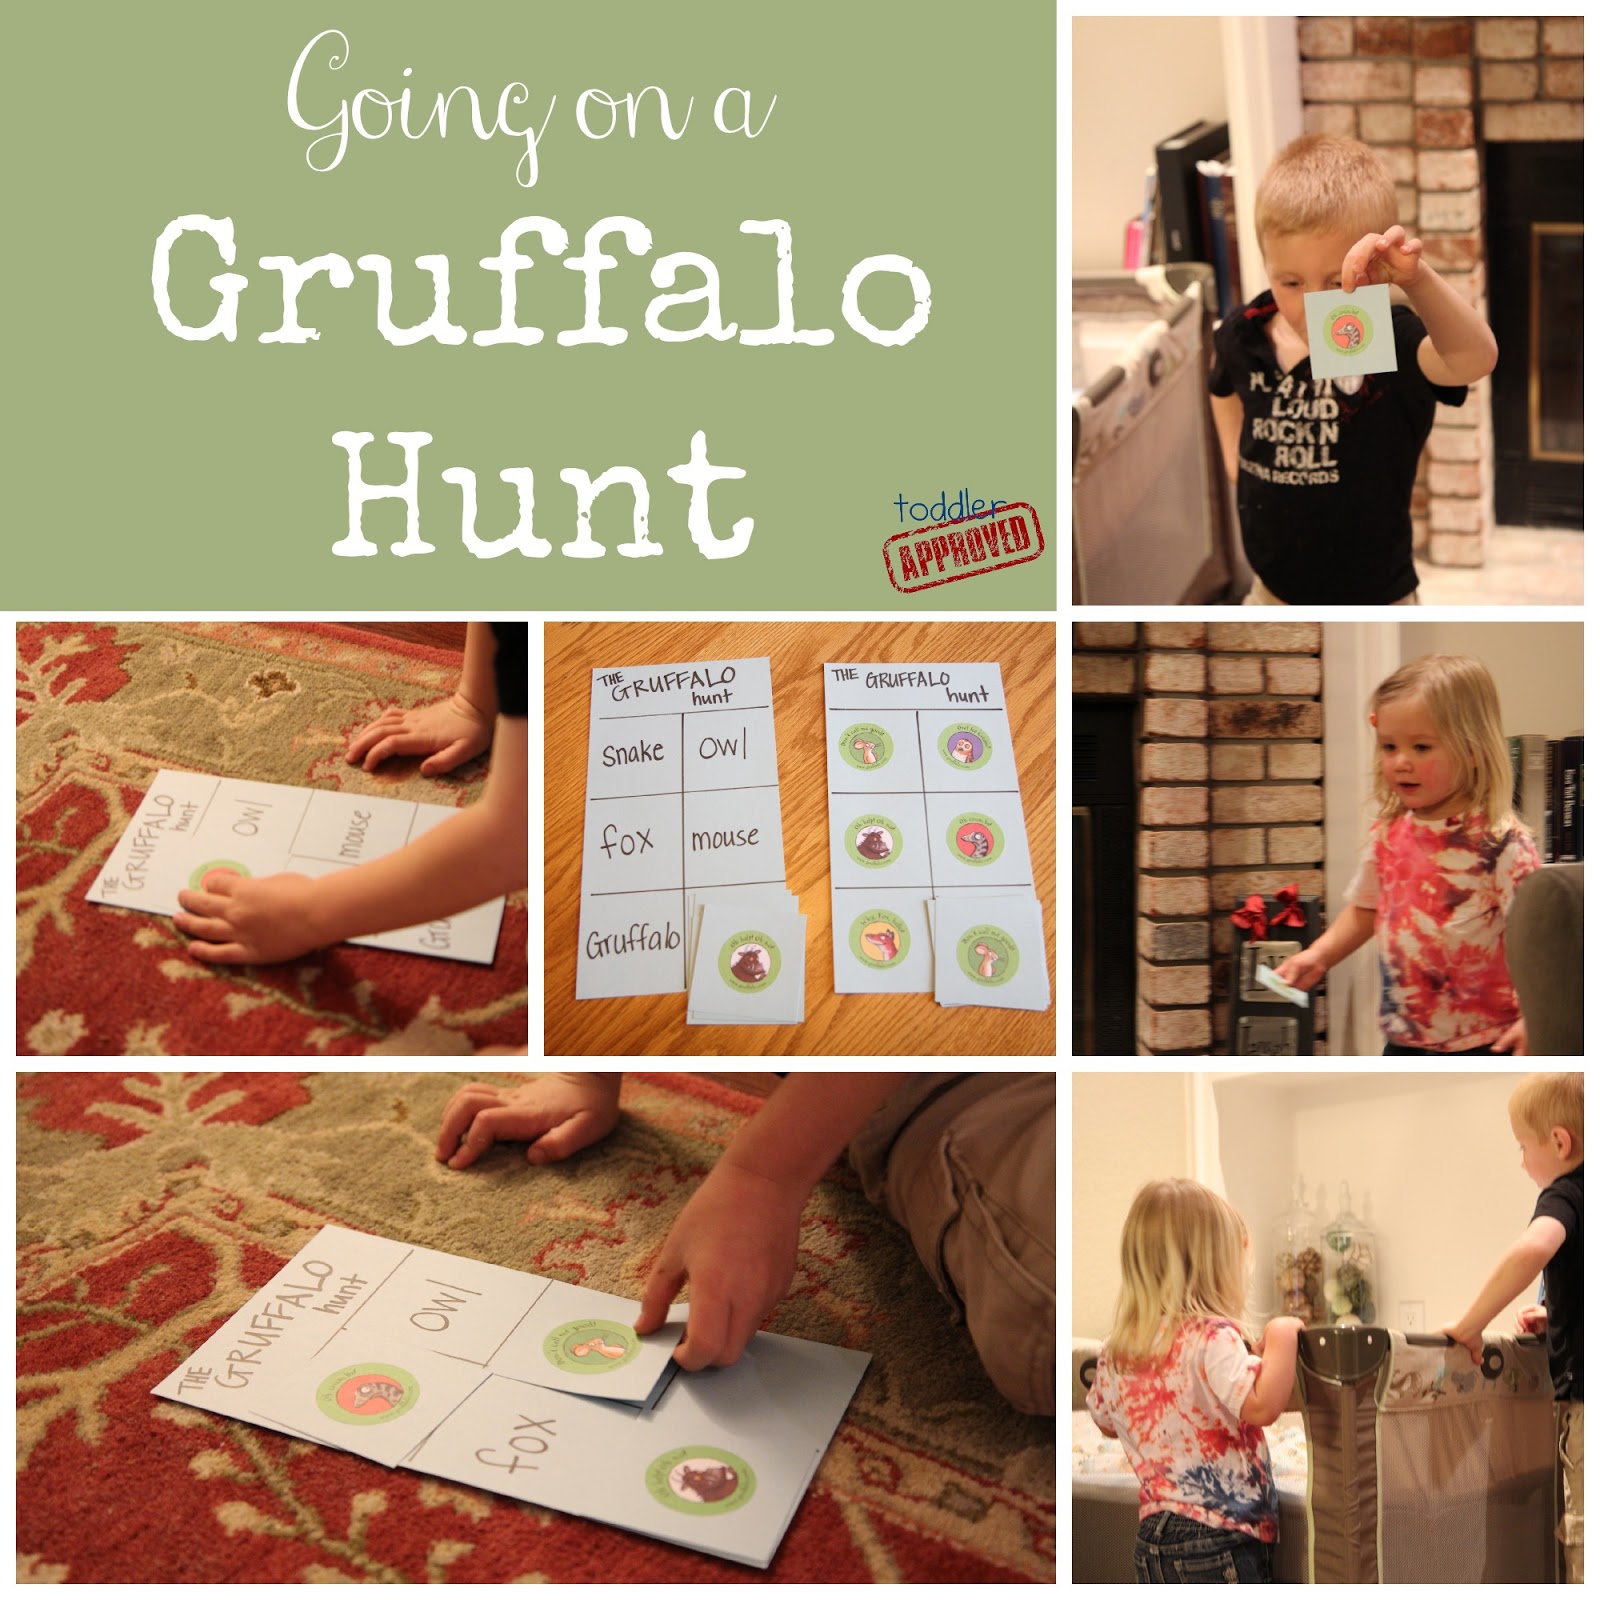 Toddler Approved The Gruffalo Julia Donaldson Virtual